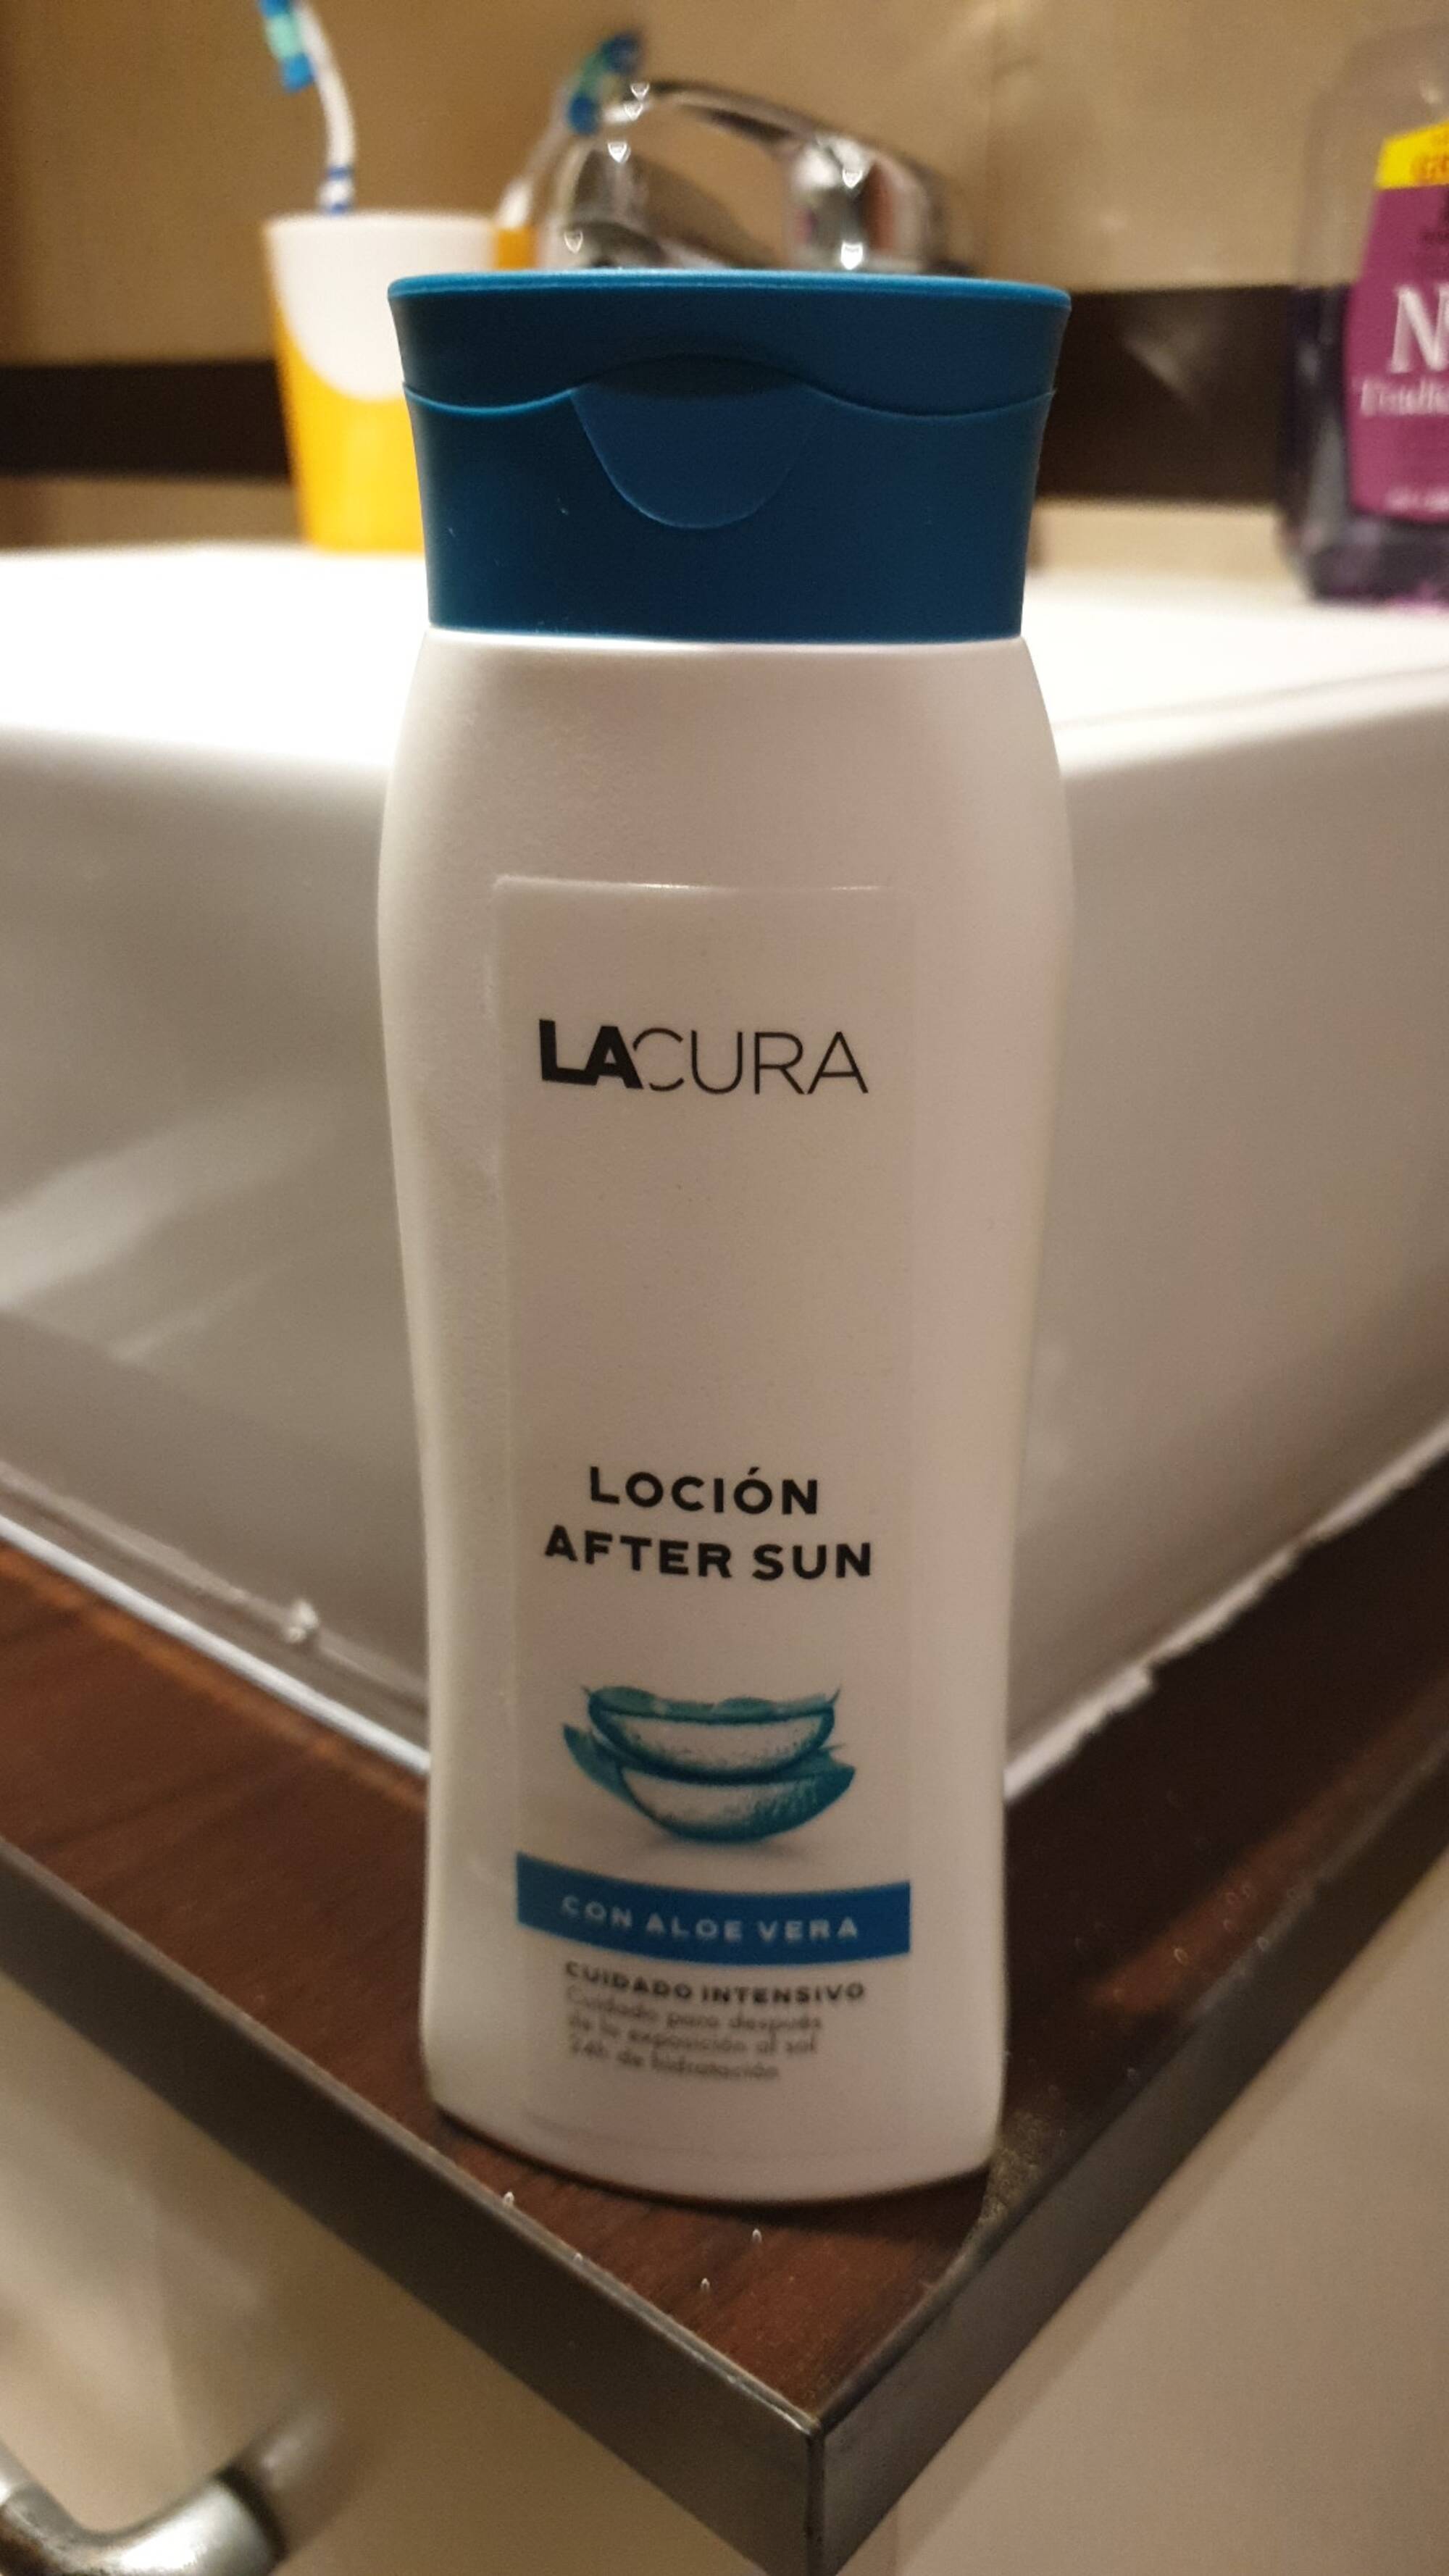 LACURA - Locion after sun con aloe vera